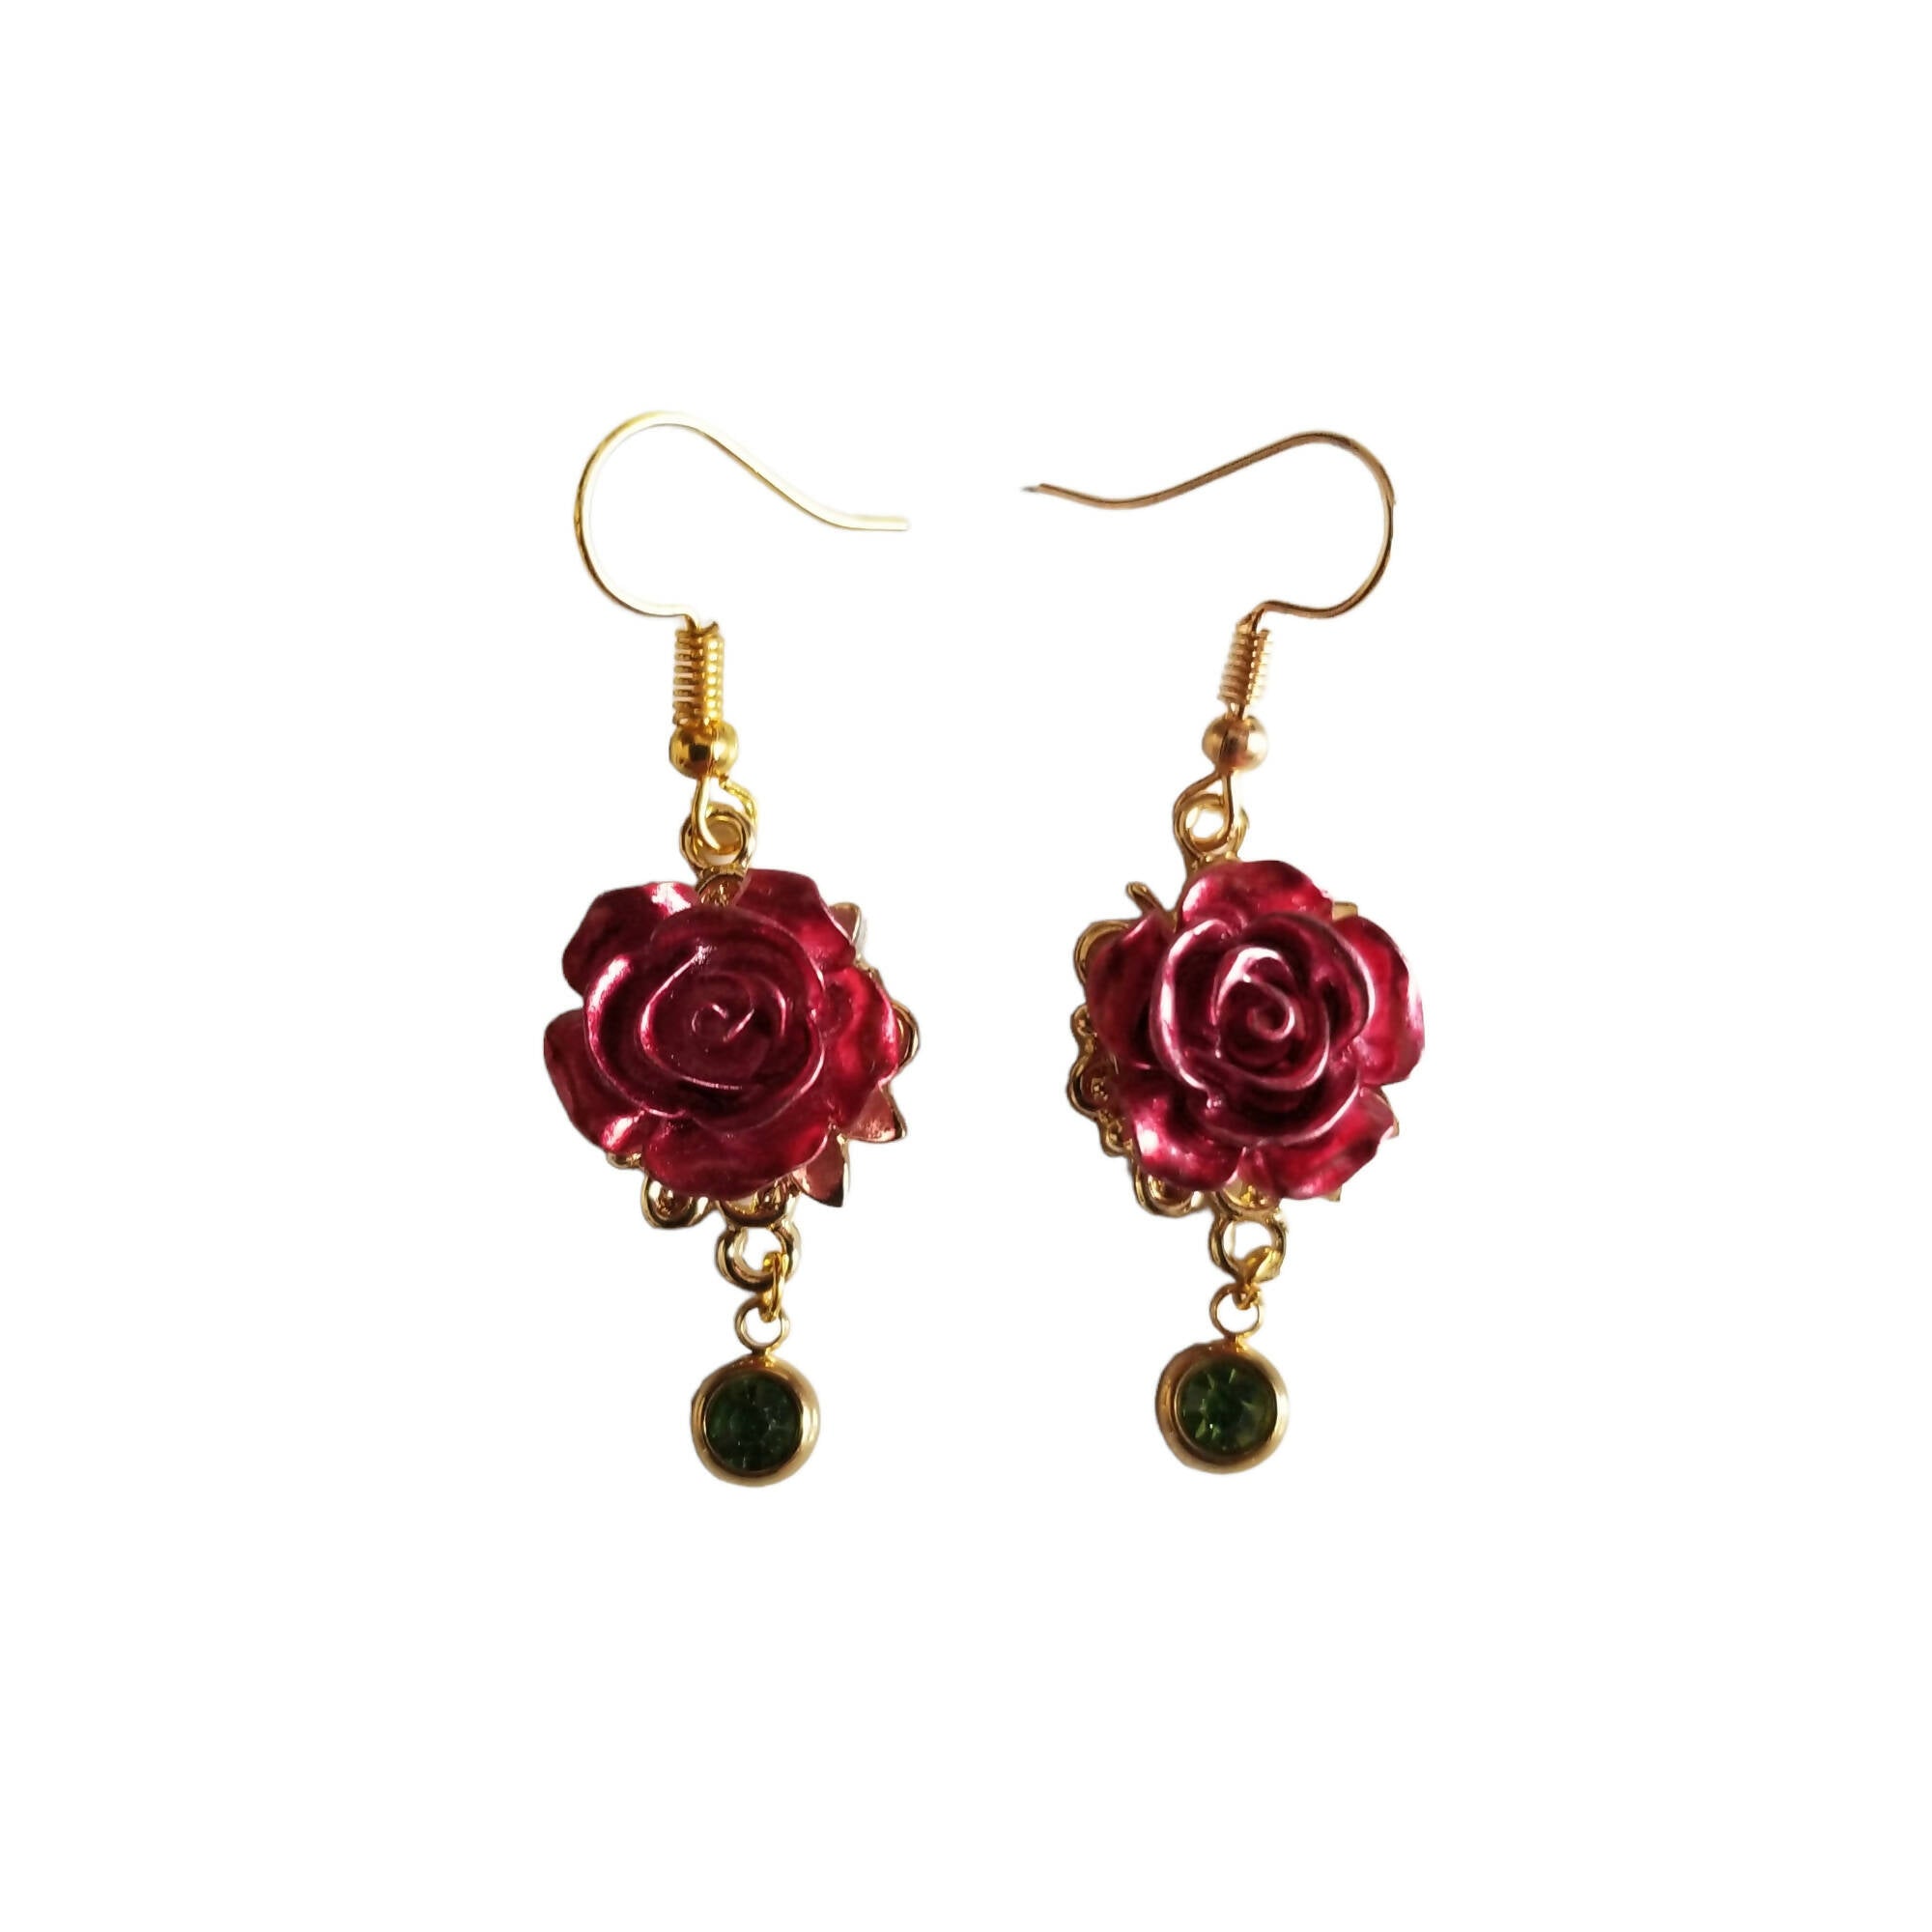 Jeweled Rose earrings